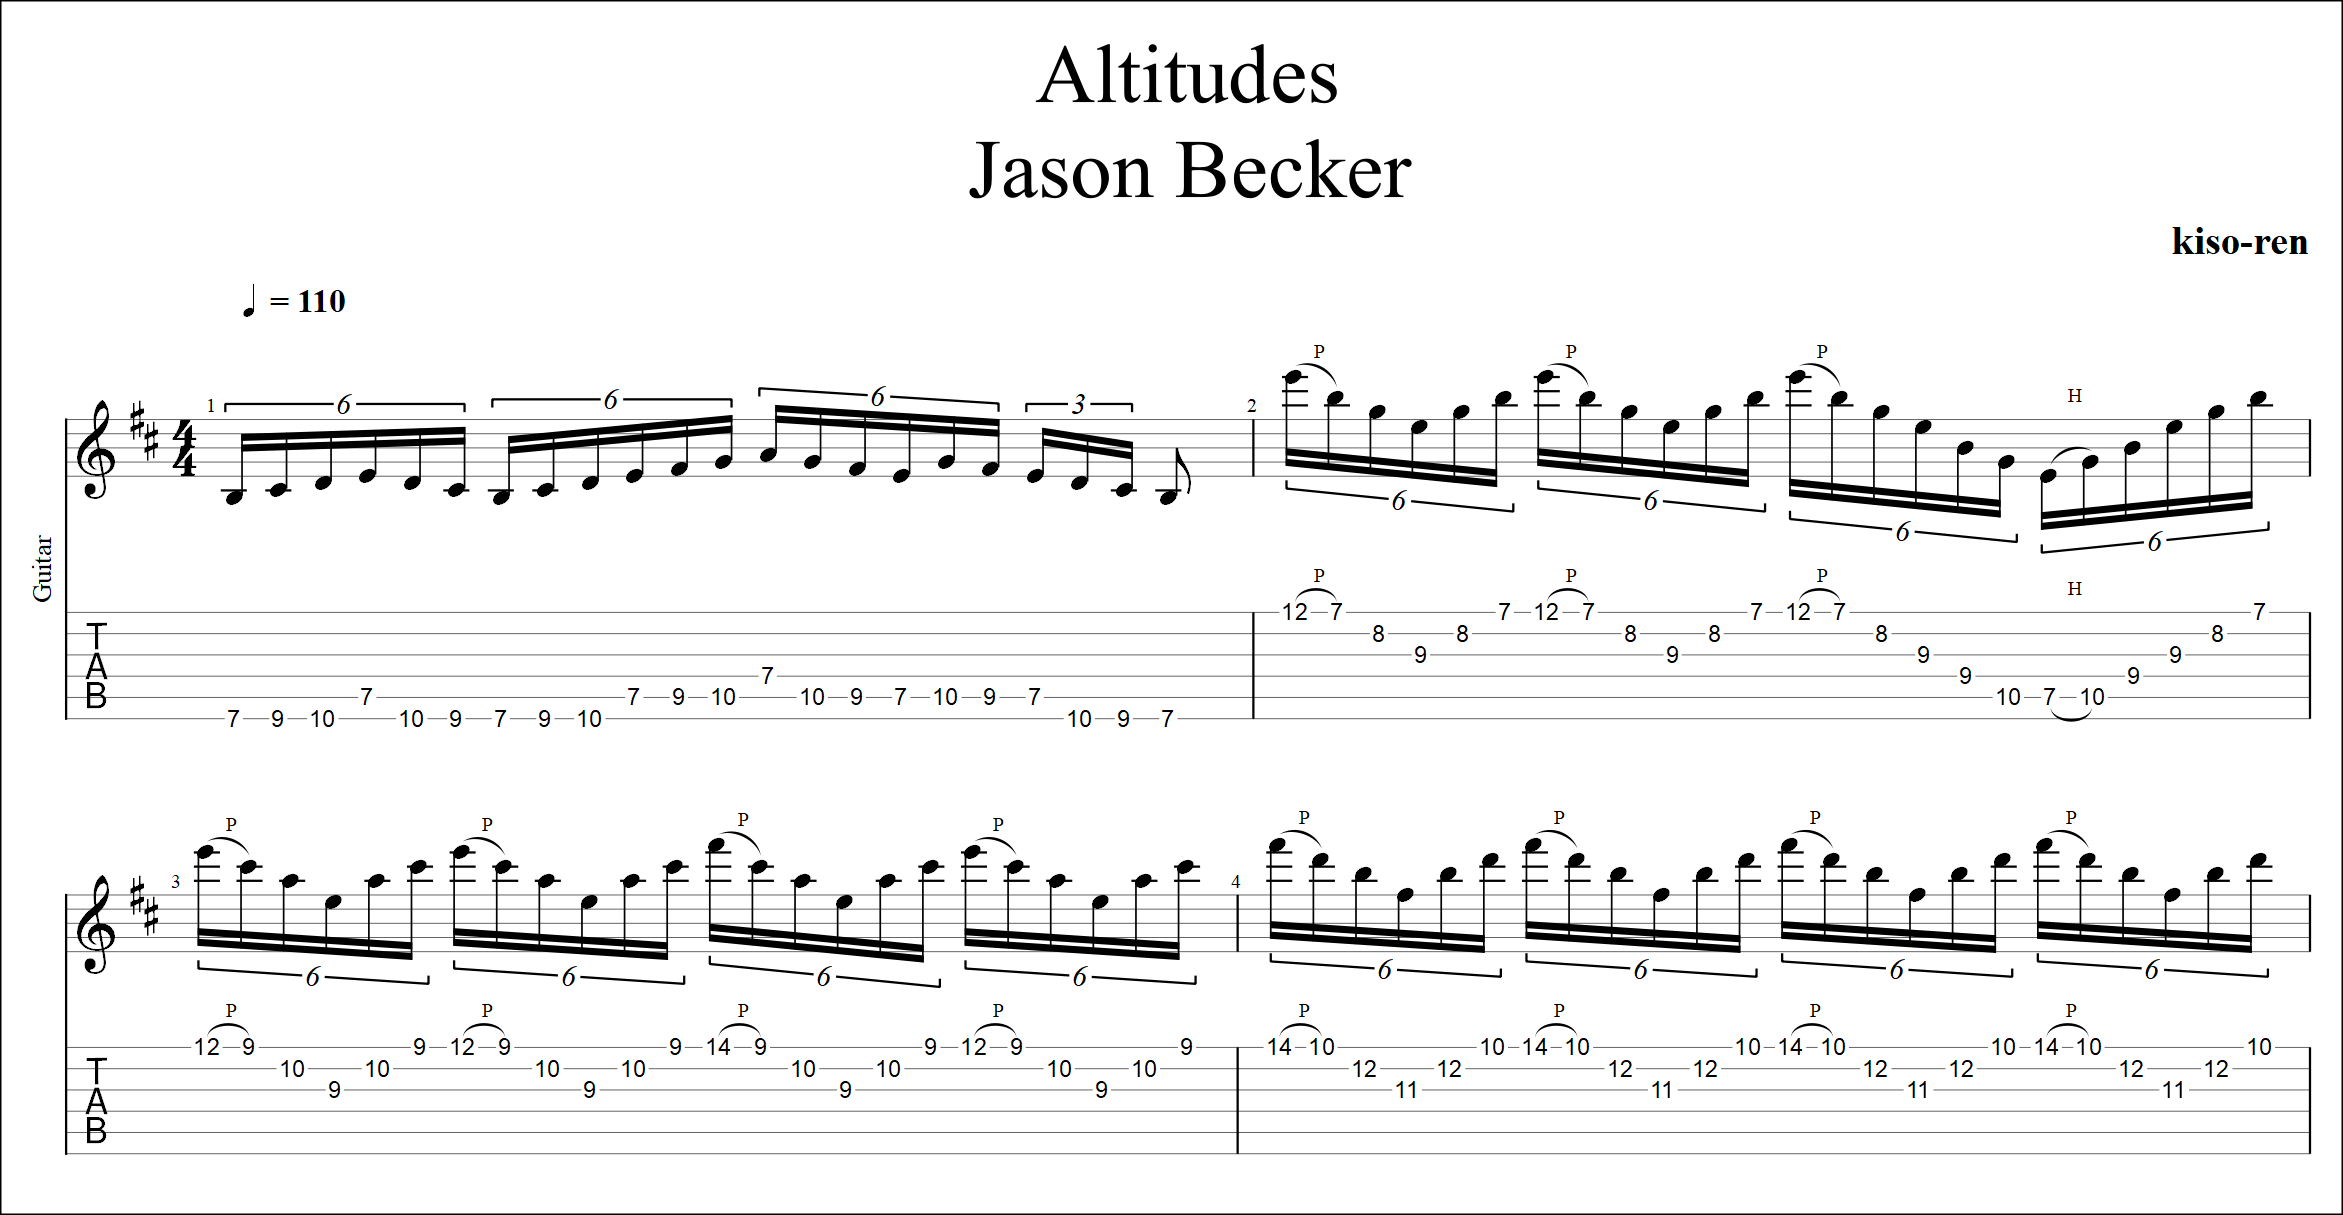 【TAB】Jason Becker/ Altitudes Sweep Arpeggios Practice ジェイソン･ベッカー アルチテュード スウィープ練習 【Guitar Sweep Vol.16】